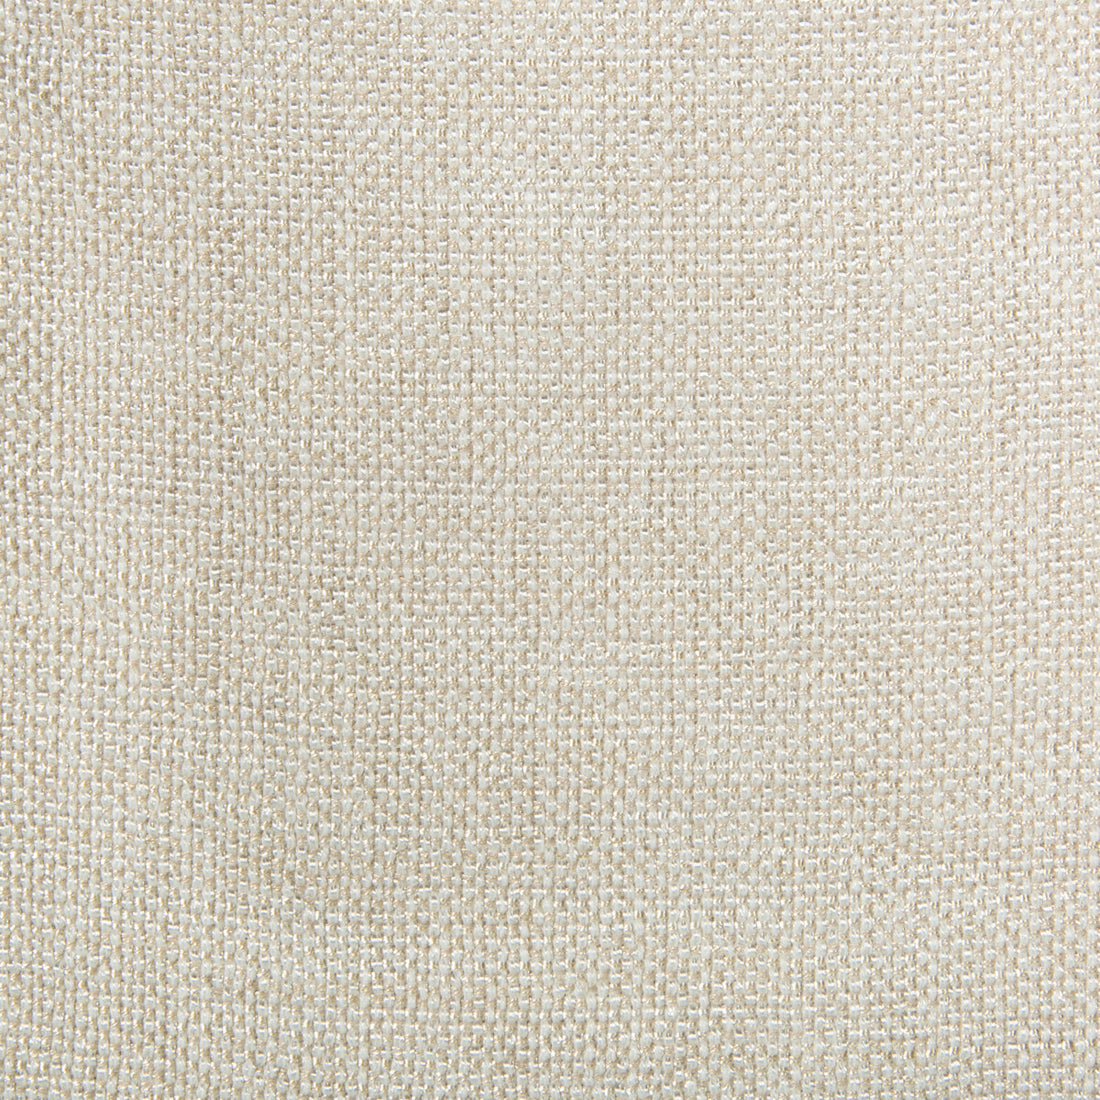 Kravet Smart fabric in 34939-101 color - pattern 34939.101.0 - by Kravet Smart